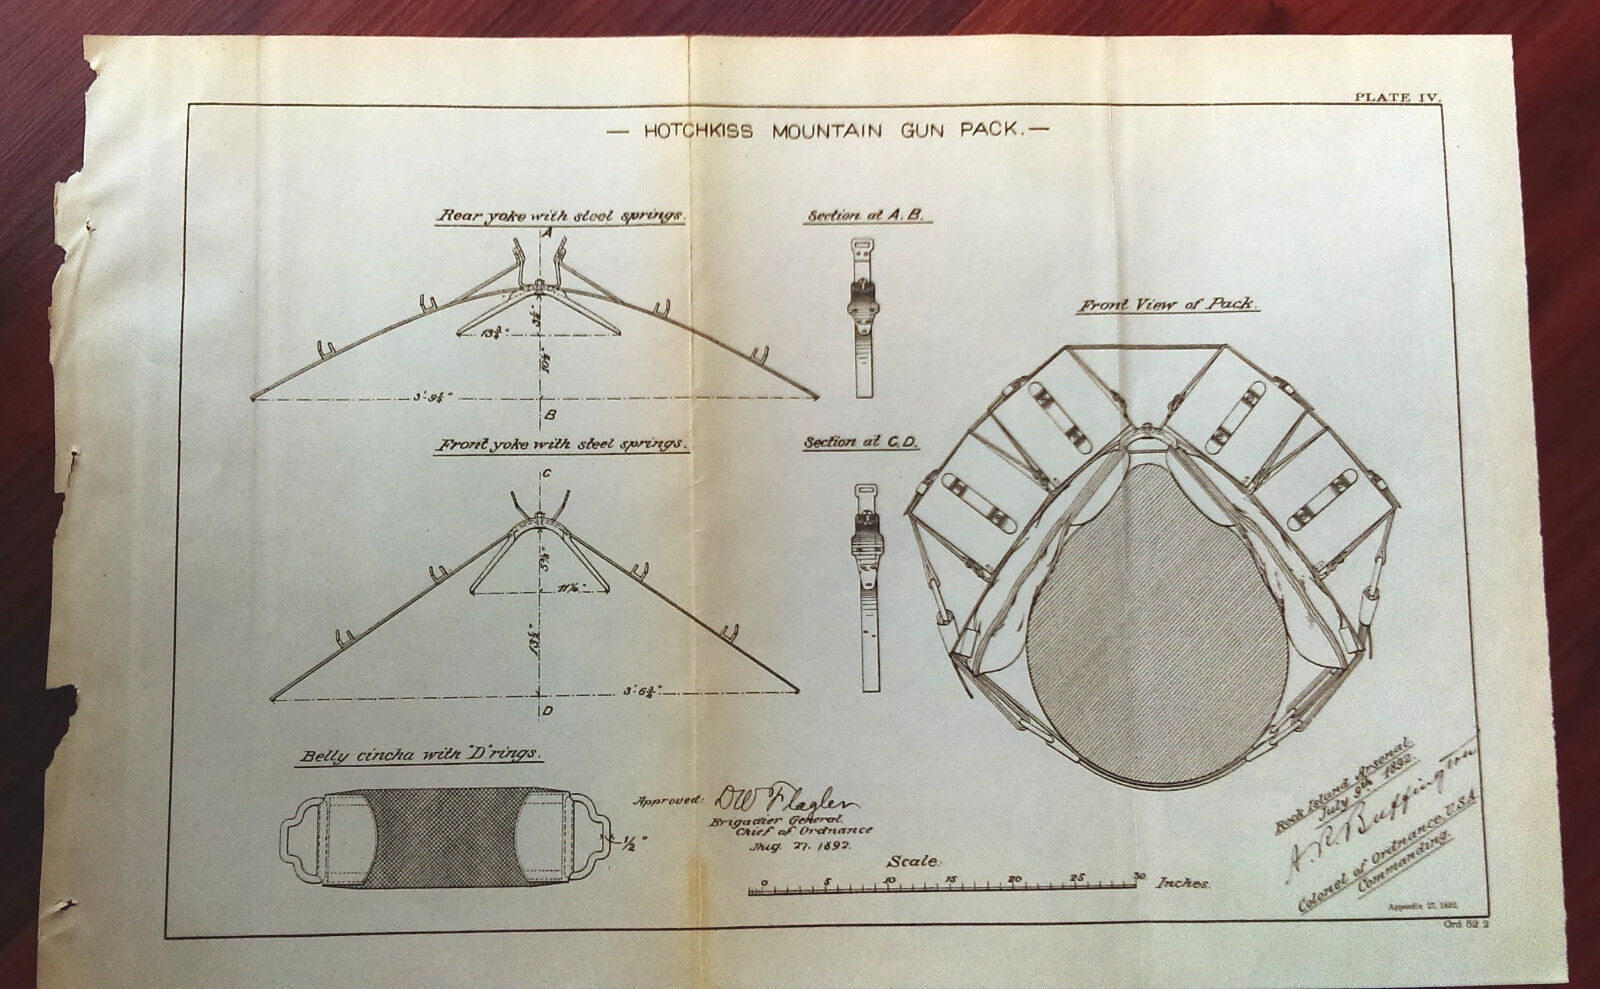 1892 Hotchkiss Mountain Gun Pack Rock Island Arsenal Sketch Diagram 